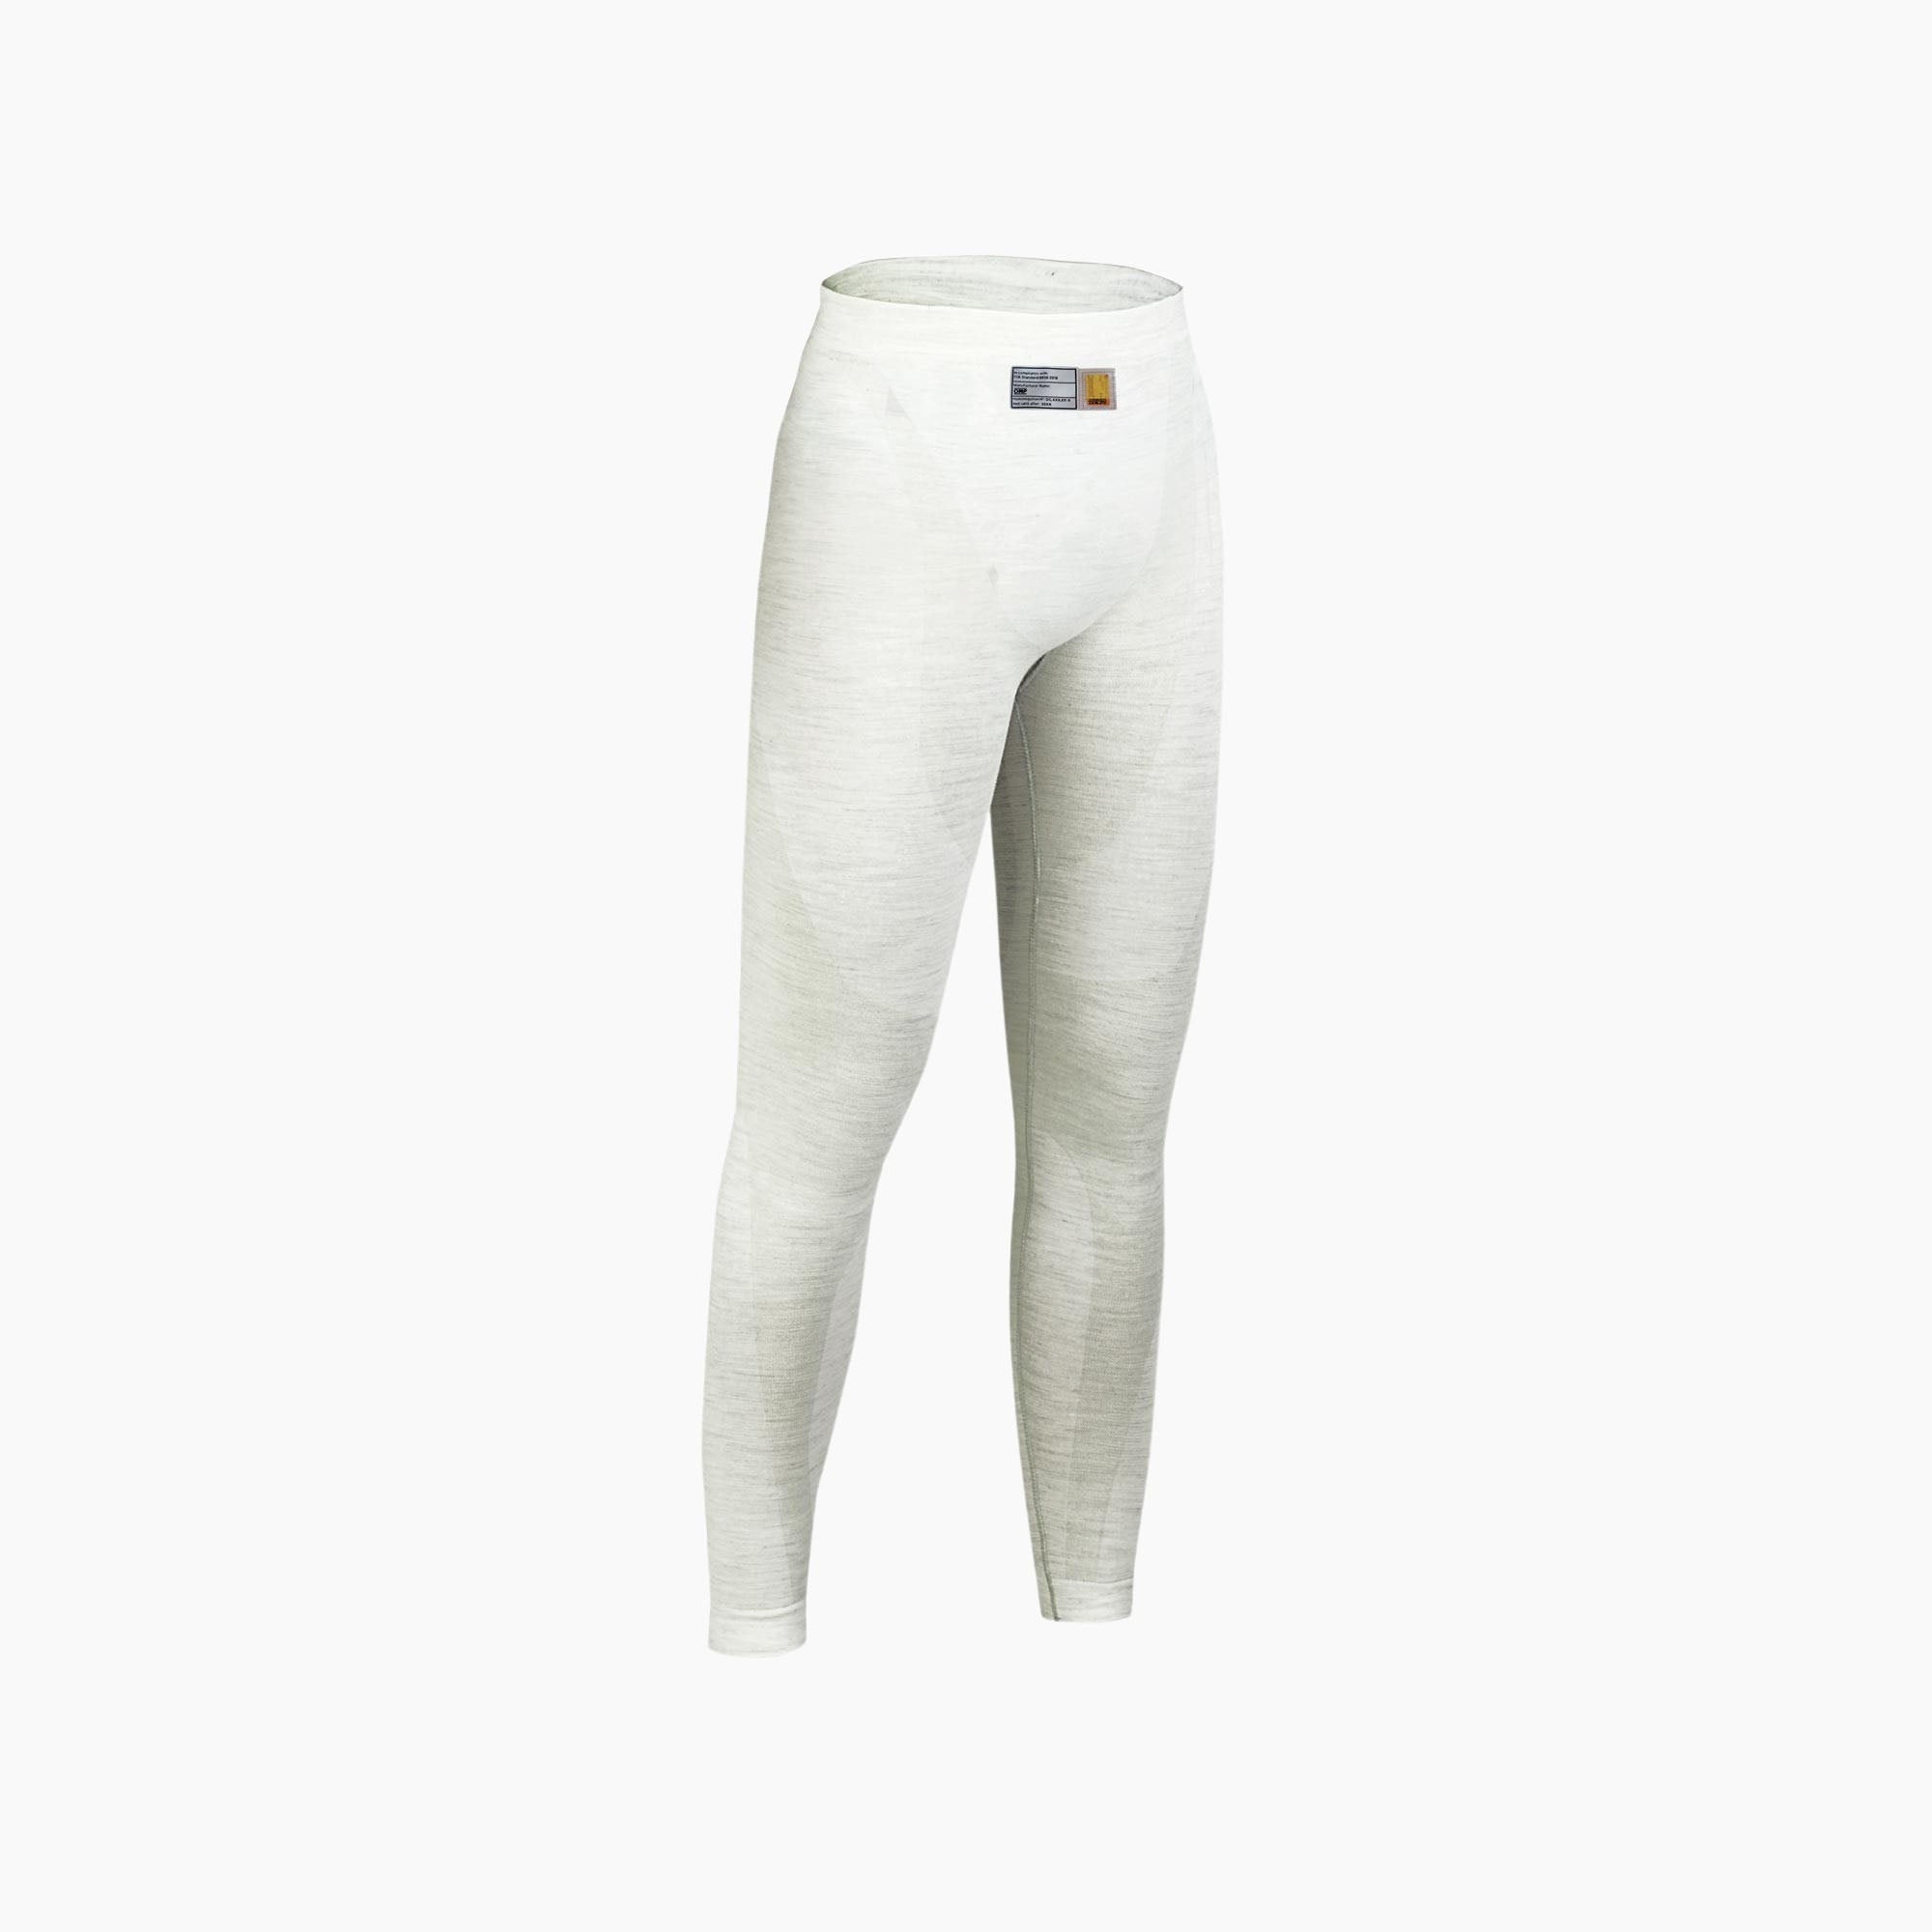 OMP | ONE Underwear Pants White - MY2020-Racing Underwear-OMP-gpx-store